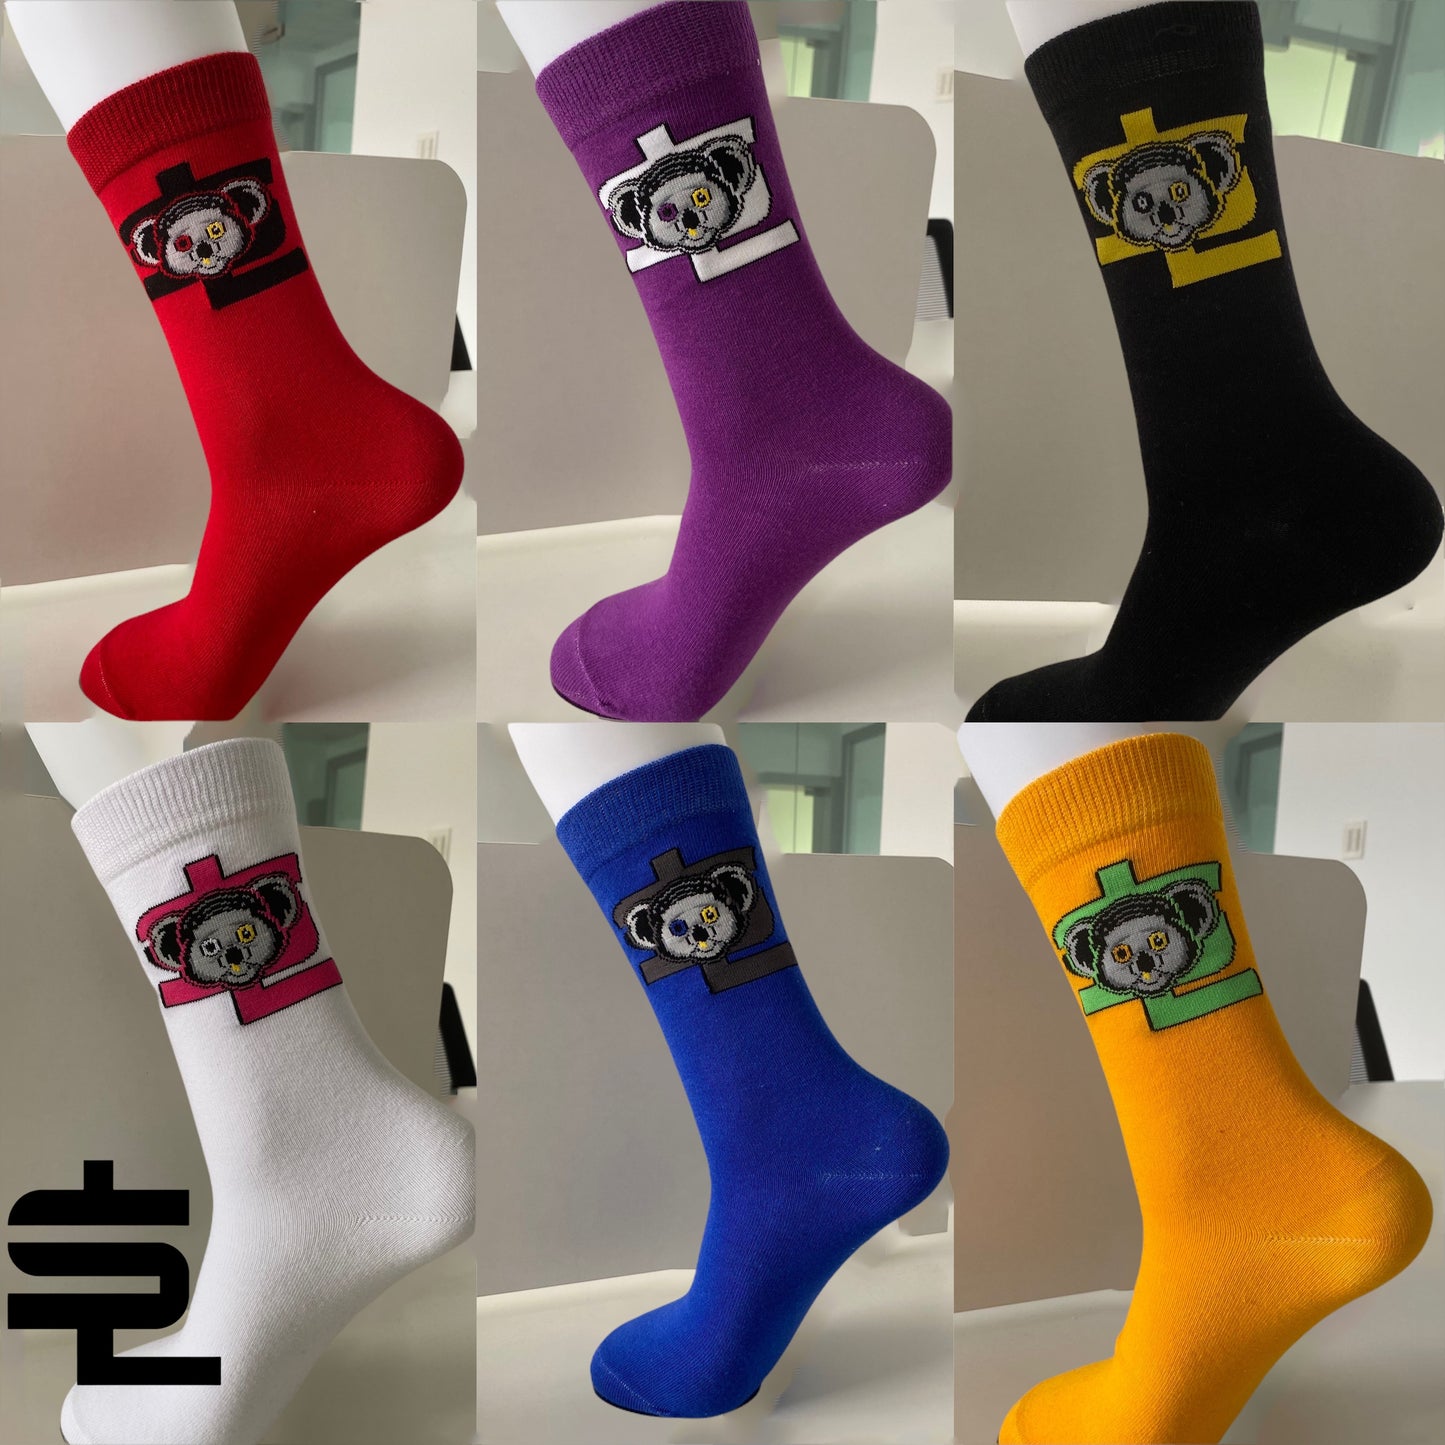 SL socks